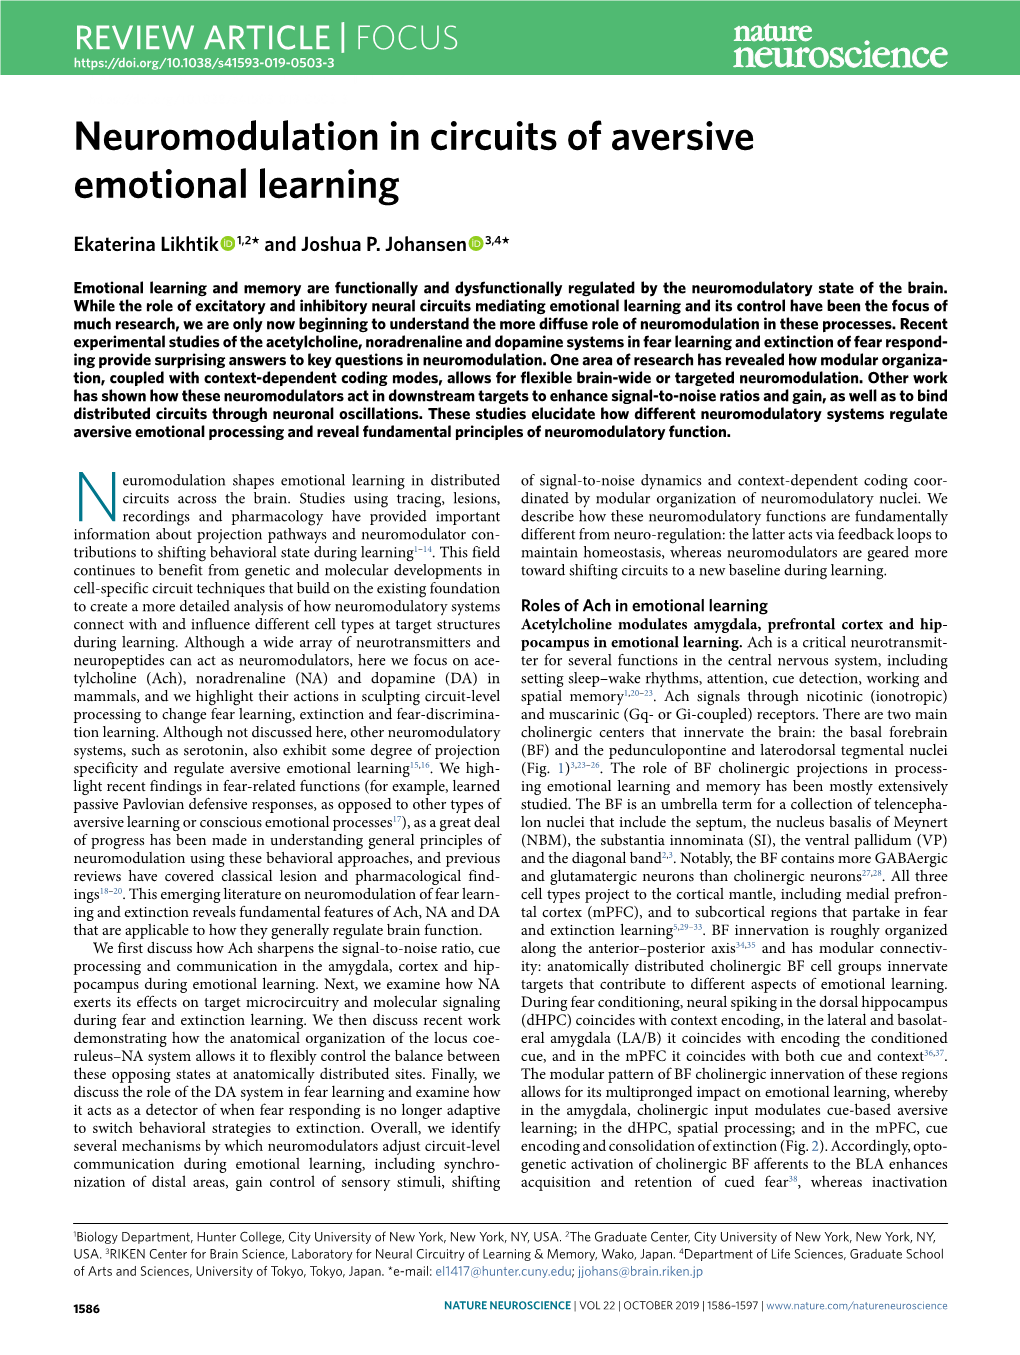 Neuromodulation in Circuits of Aversive Emotional Learning